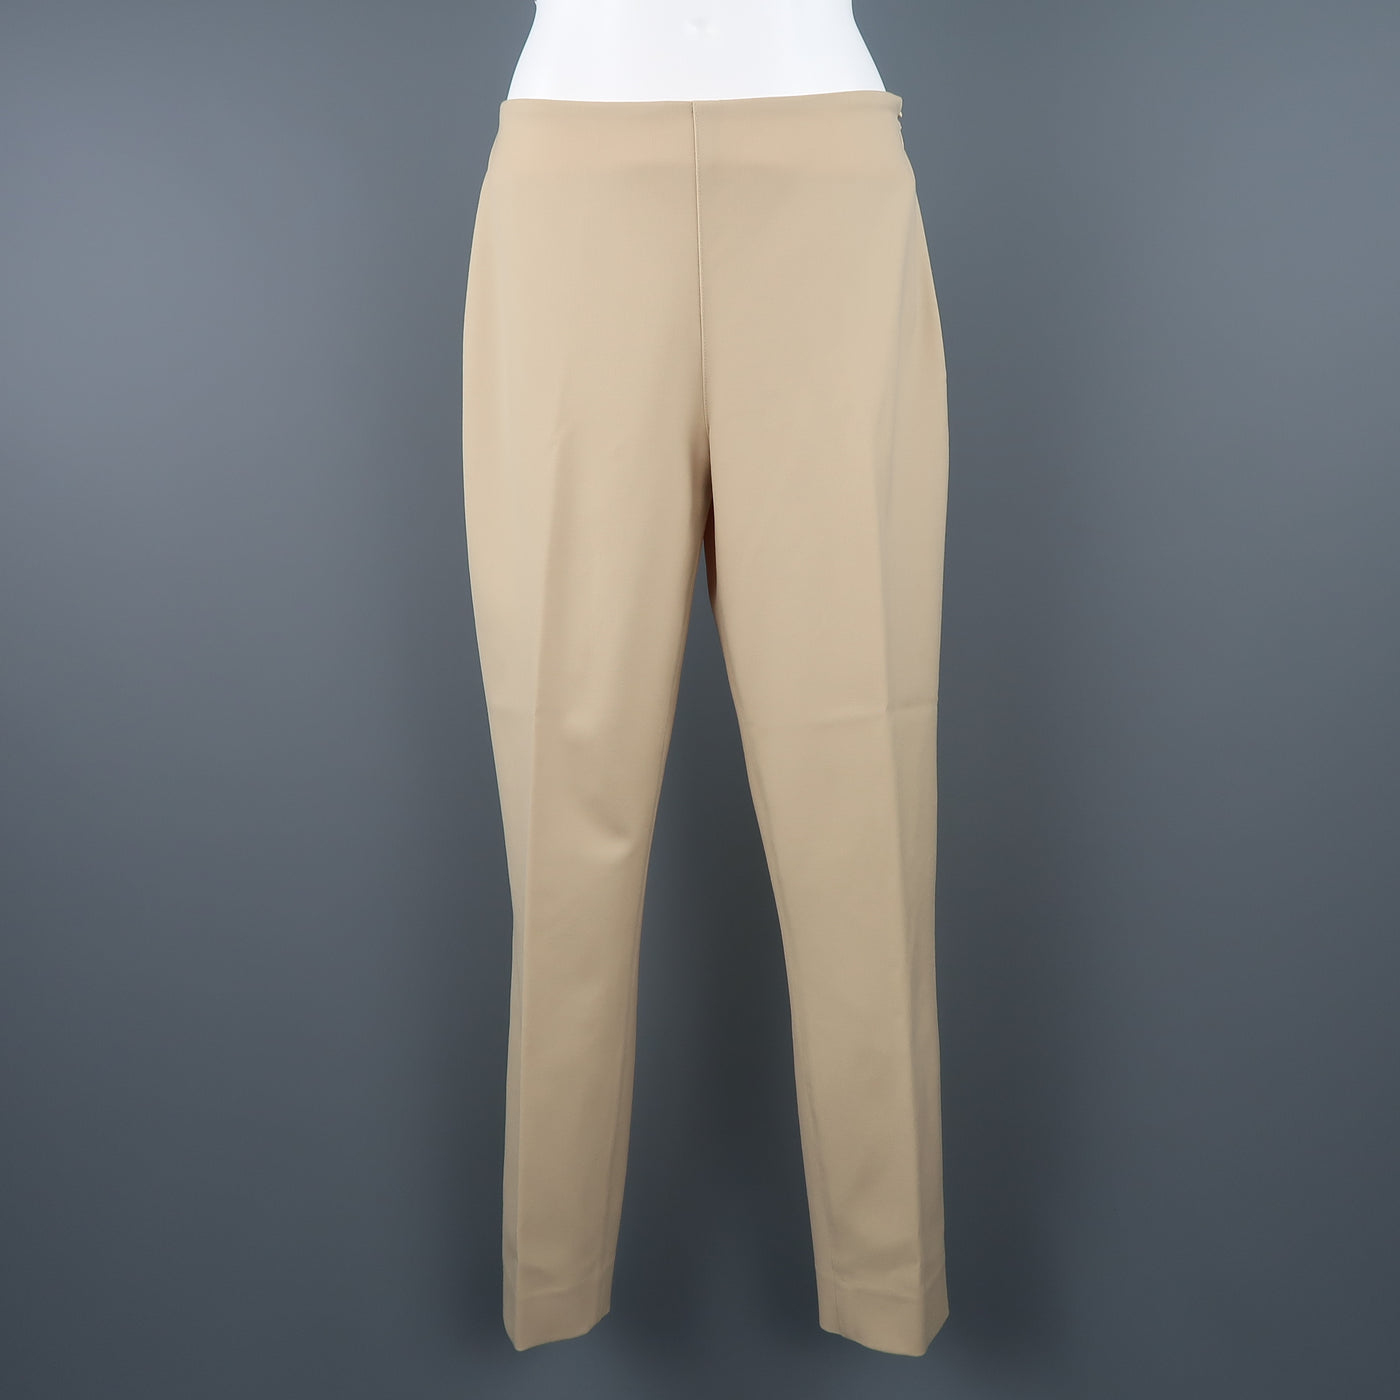 RALPH LAUREN Size 6 Tan Stretch Wool Skinny Dress Pants